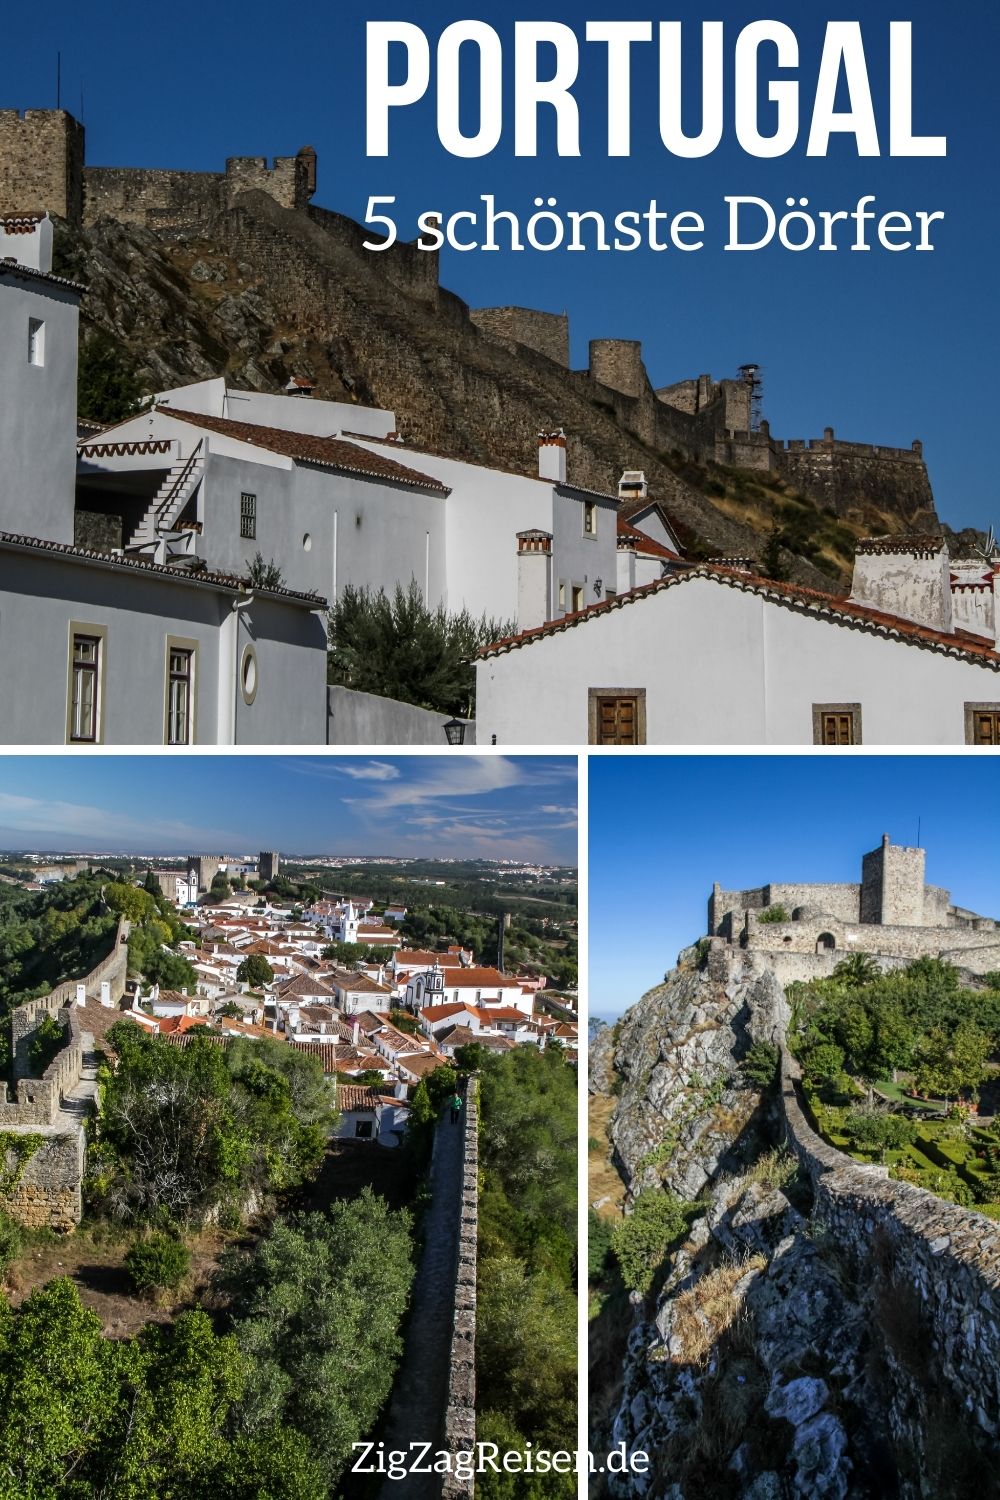 Schonste Dorfer Portugal reisen Pin2